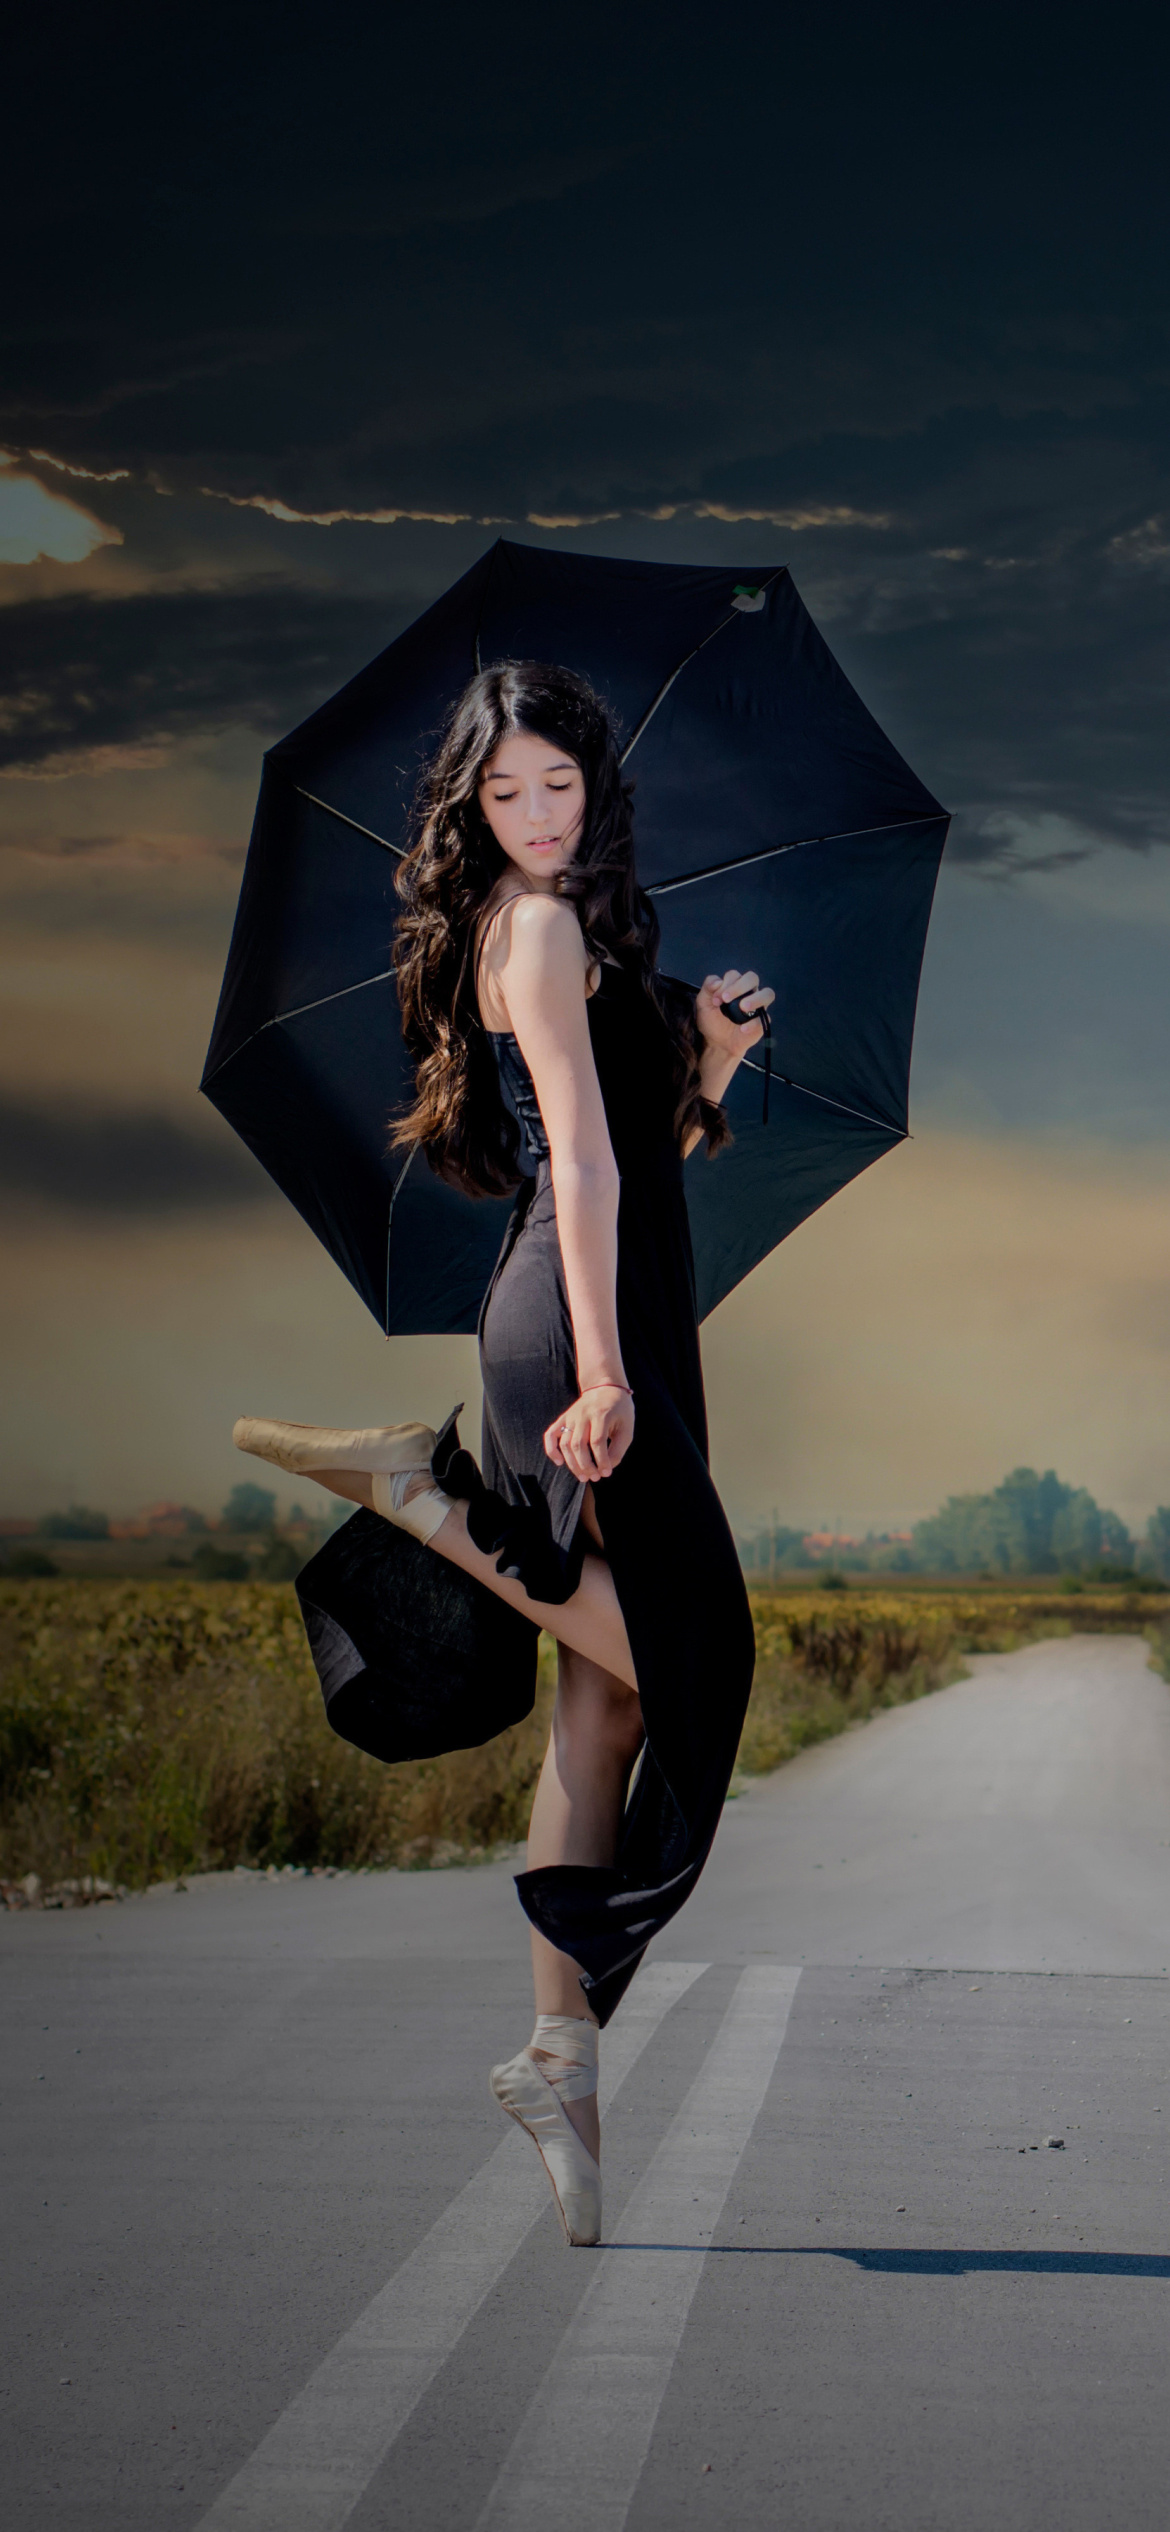 Ballerina with black umbrella wallpaper 1170x2532